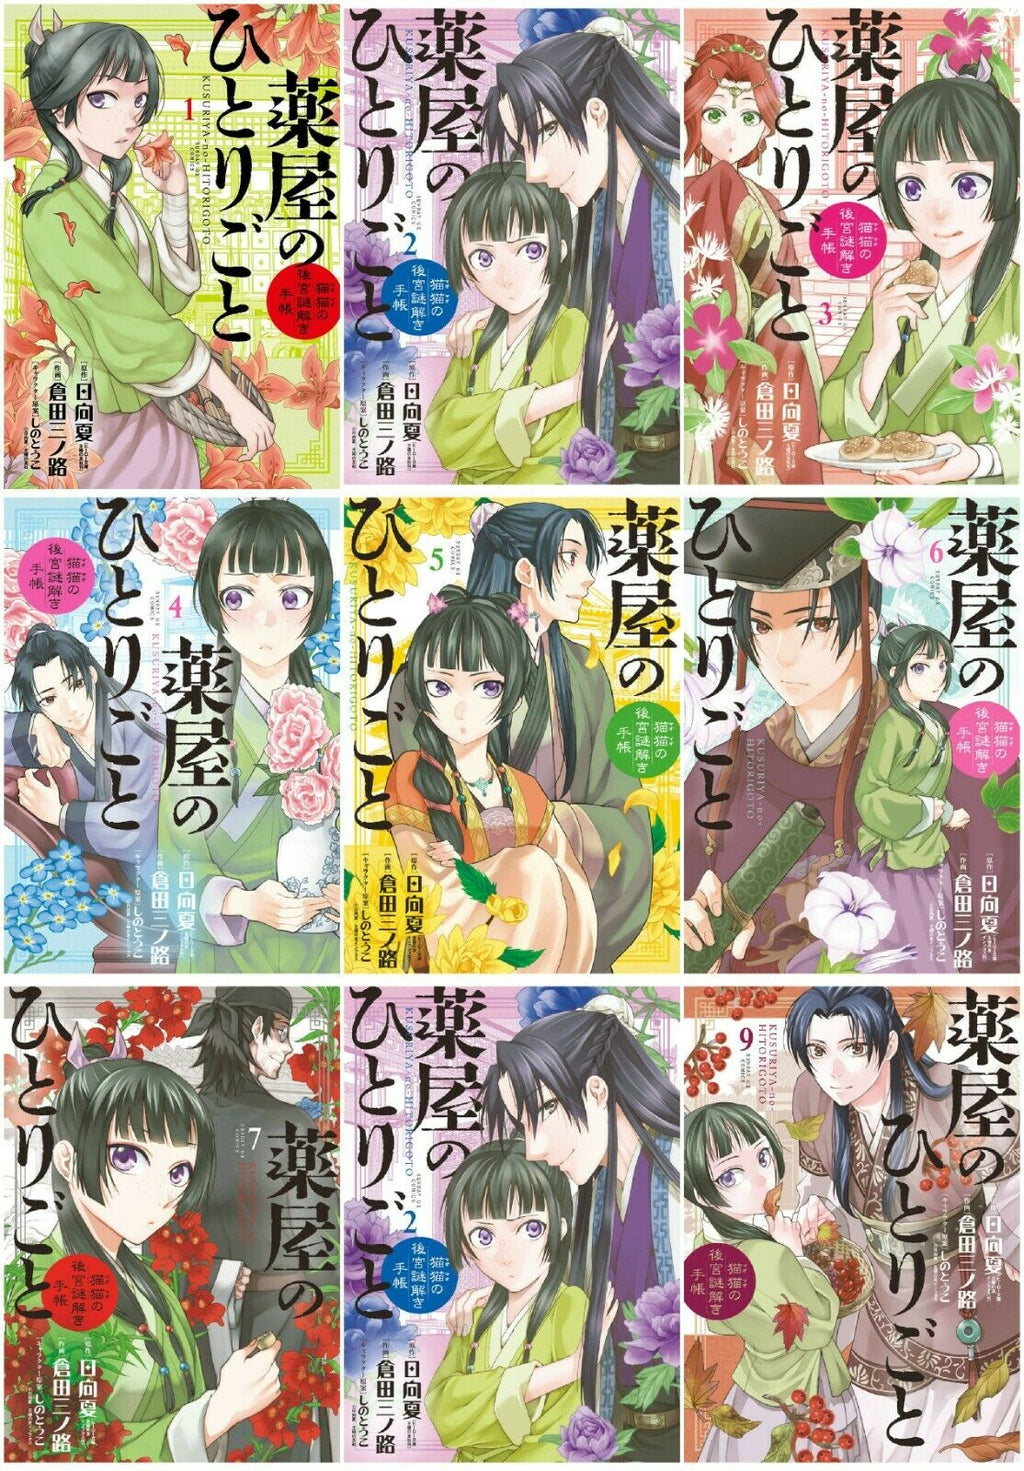 Japanese Boys Comic Manga Book Kusuriya-no-Hitorigoto Maomao 1-9 set NEW